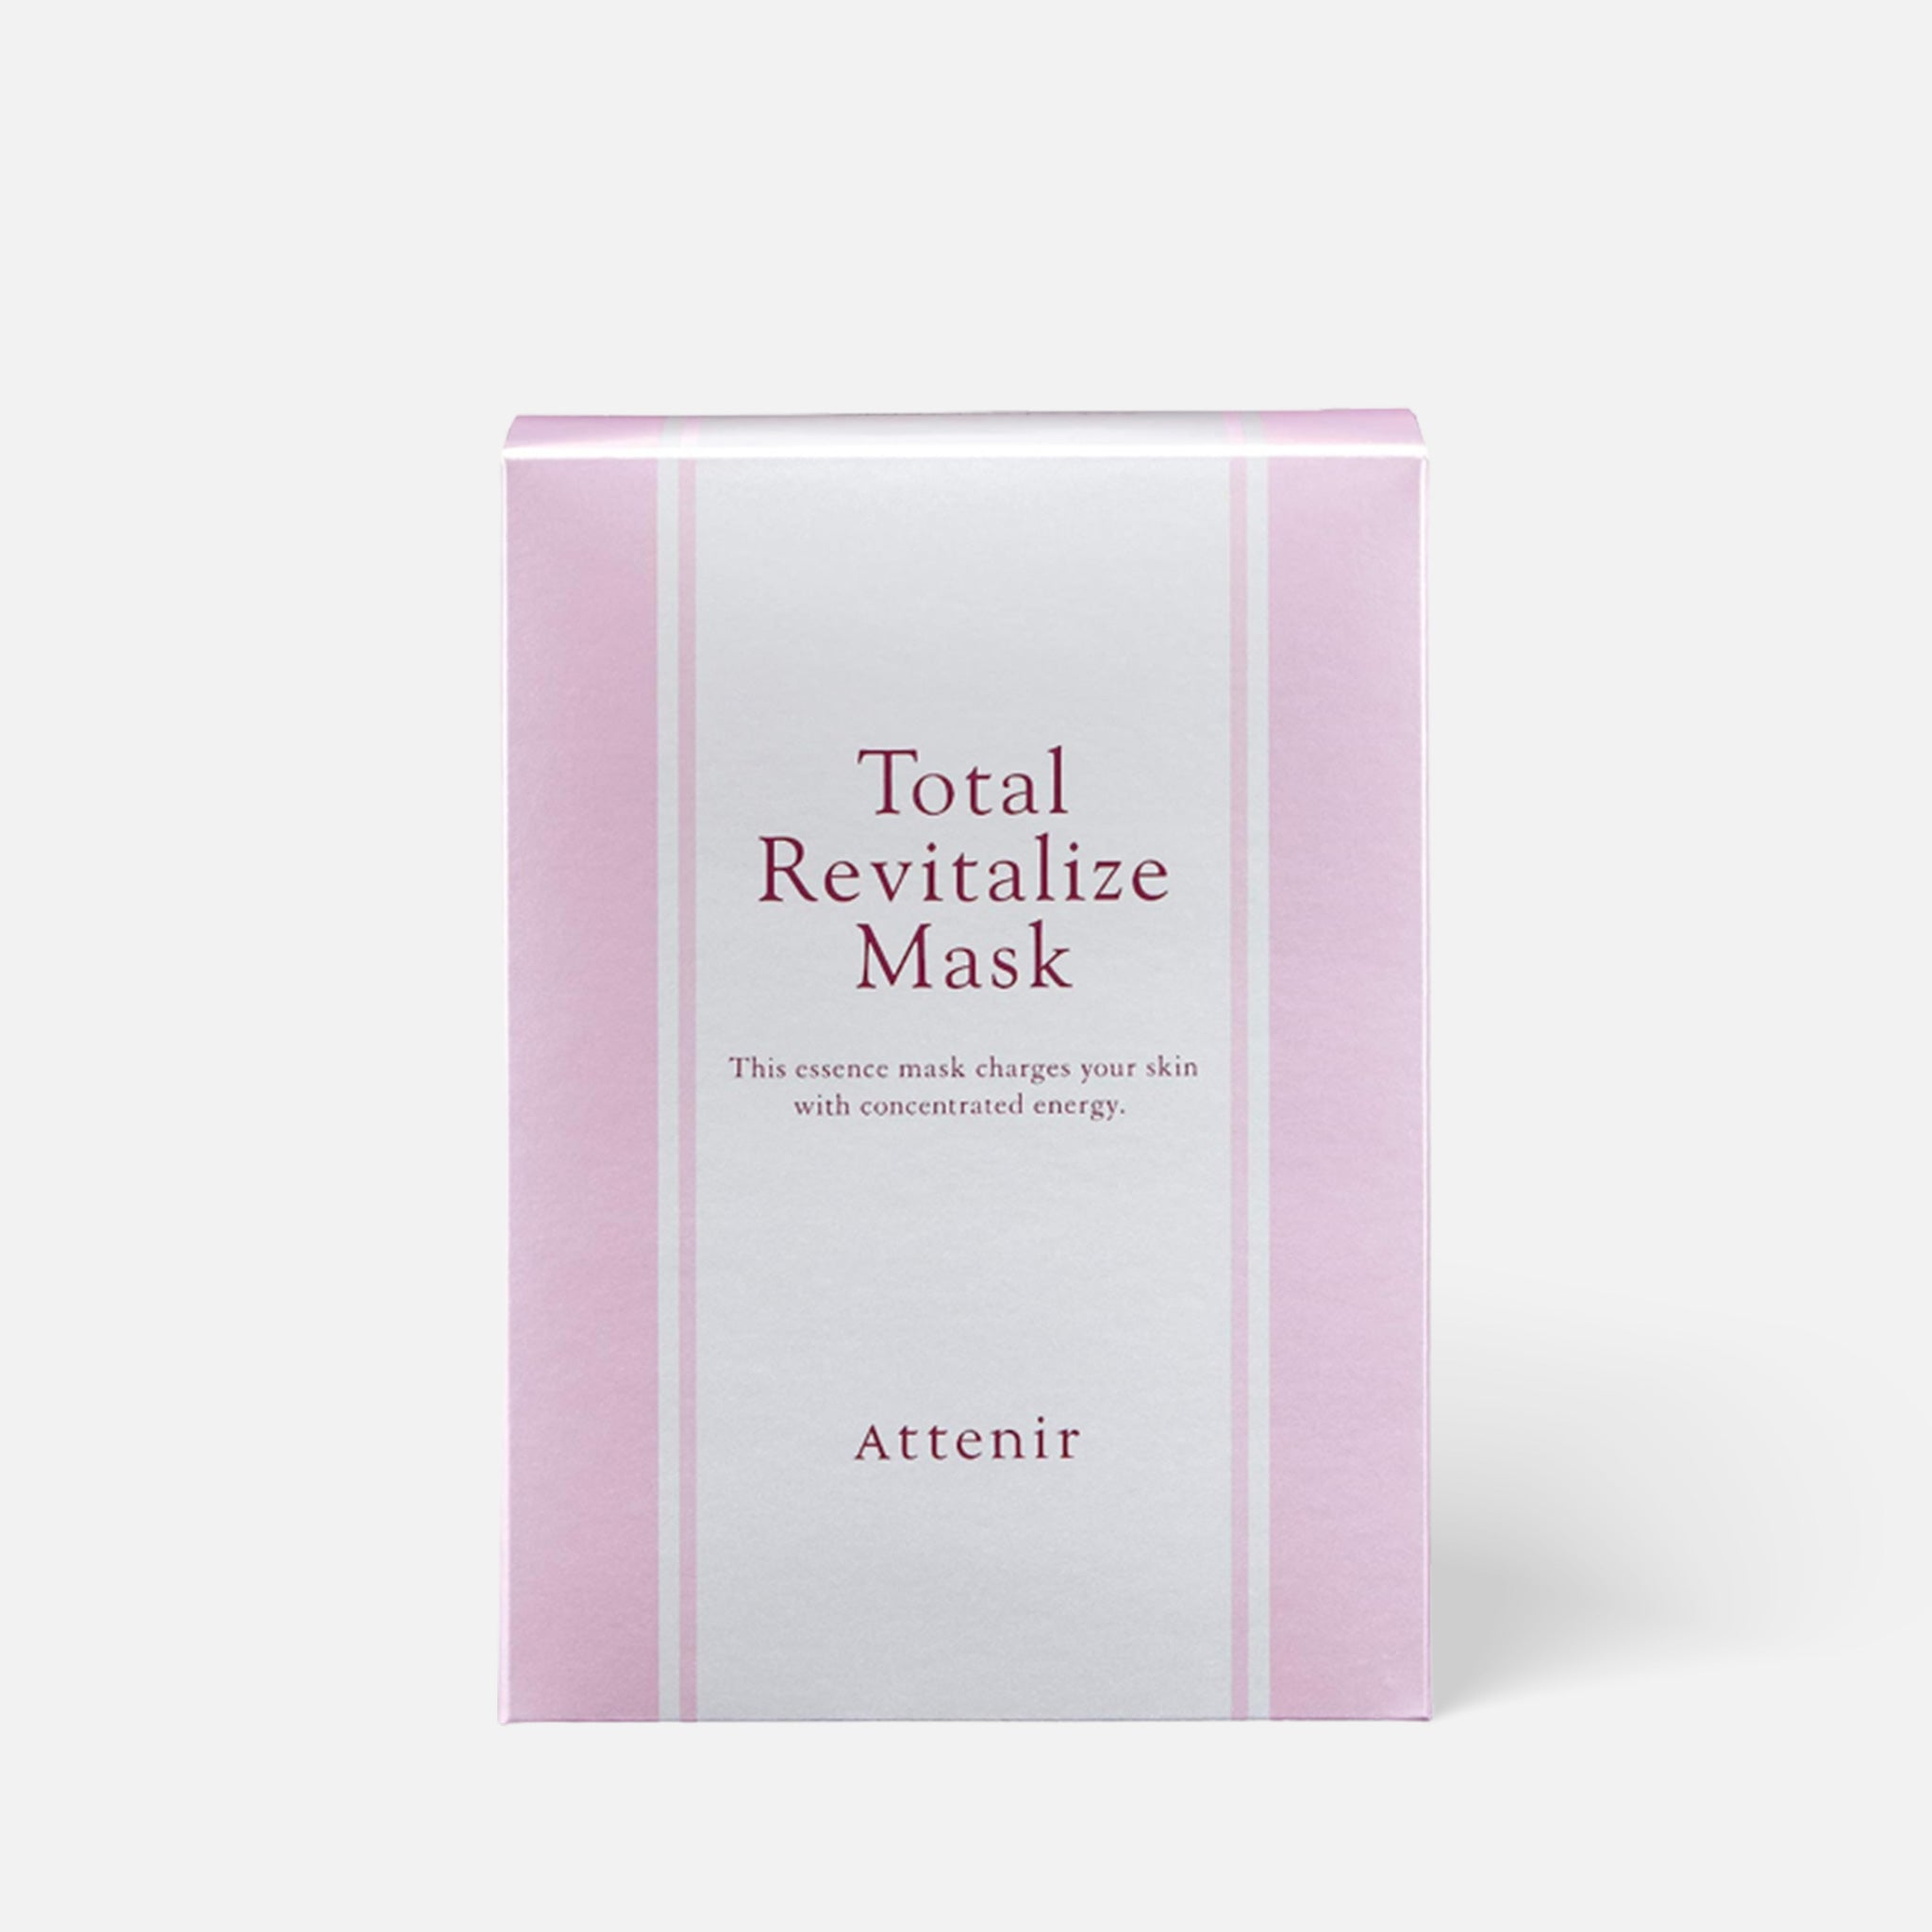 Attenir Total Revitalize Mask